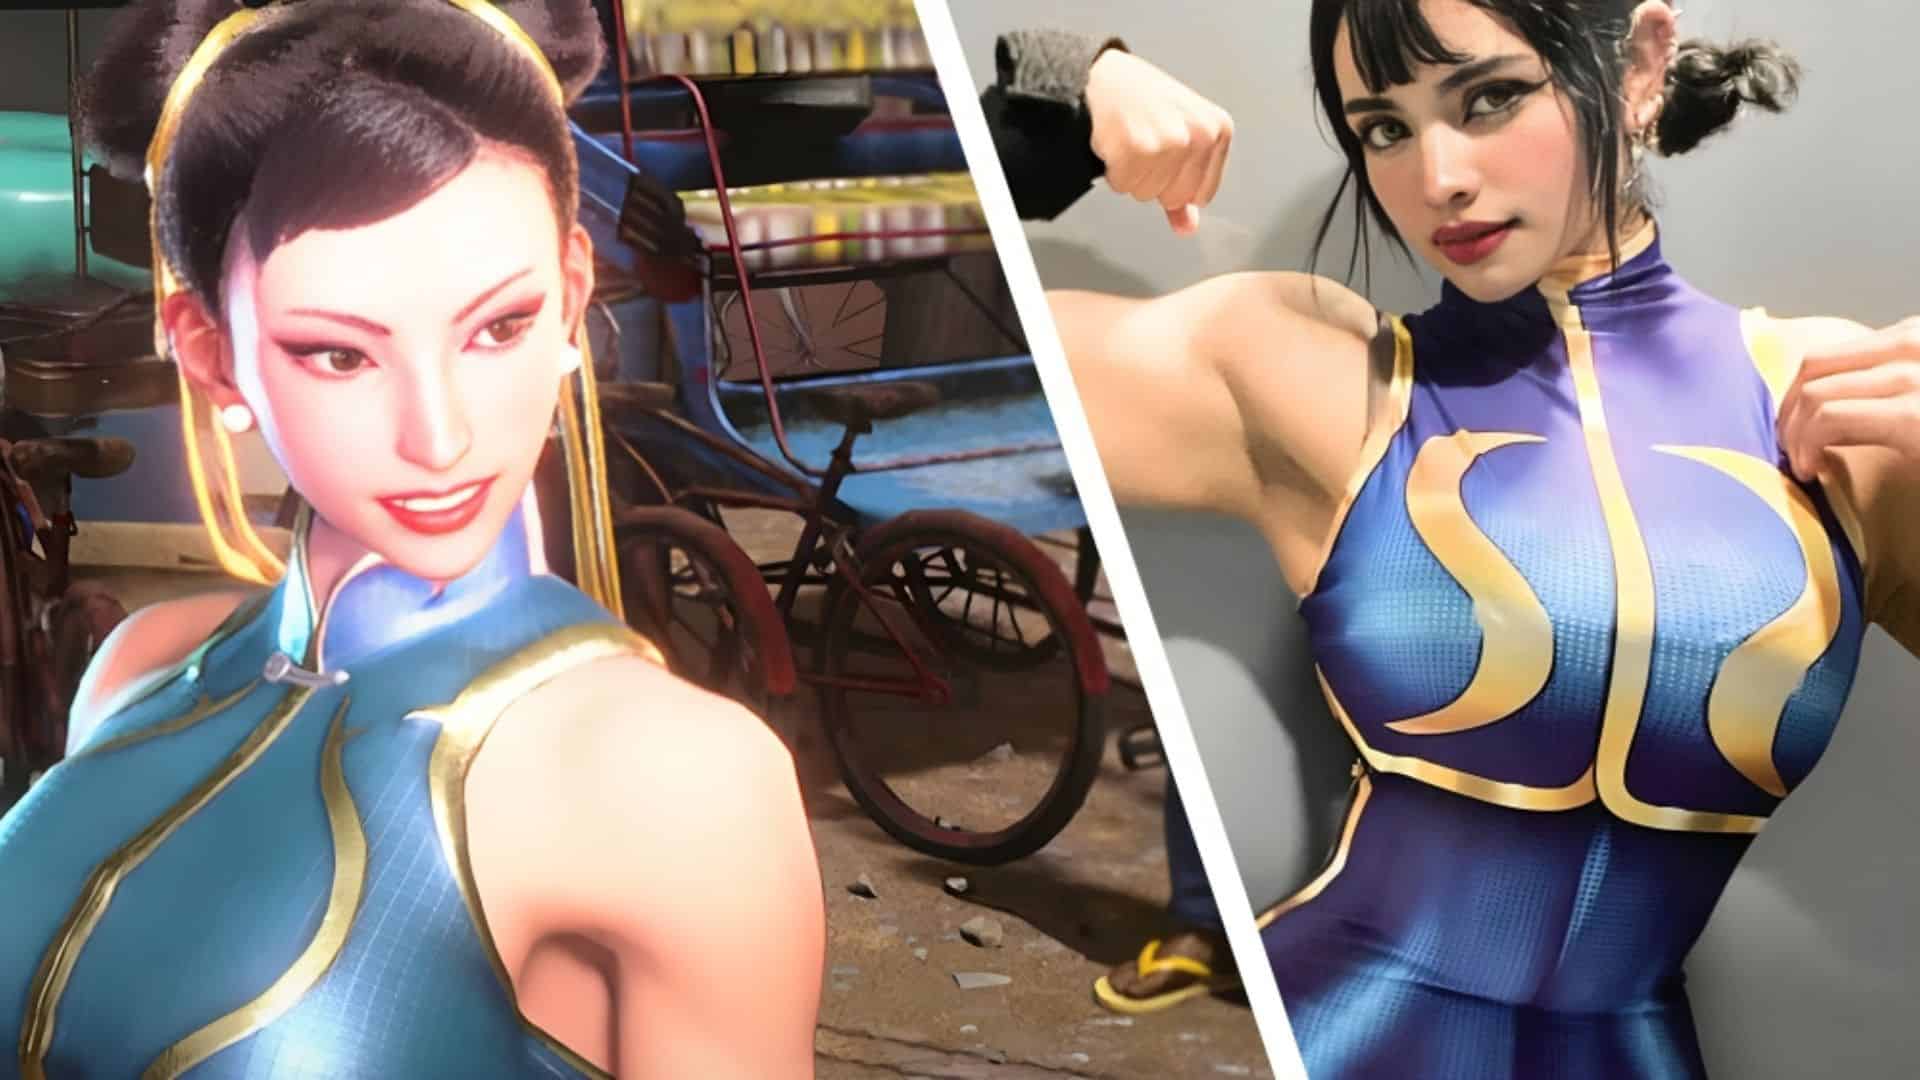 Buff Street Fighter 6 Chun Li cosplay by popular gym guru is impressive